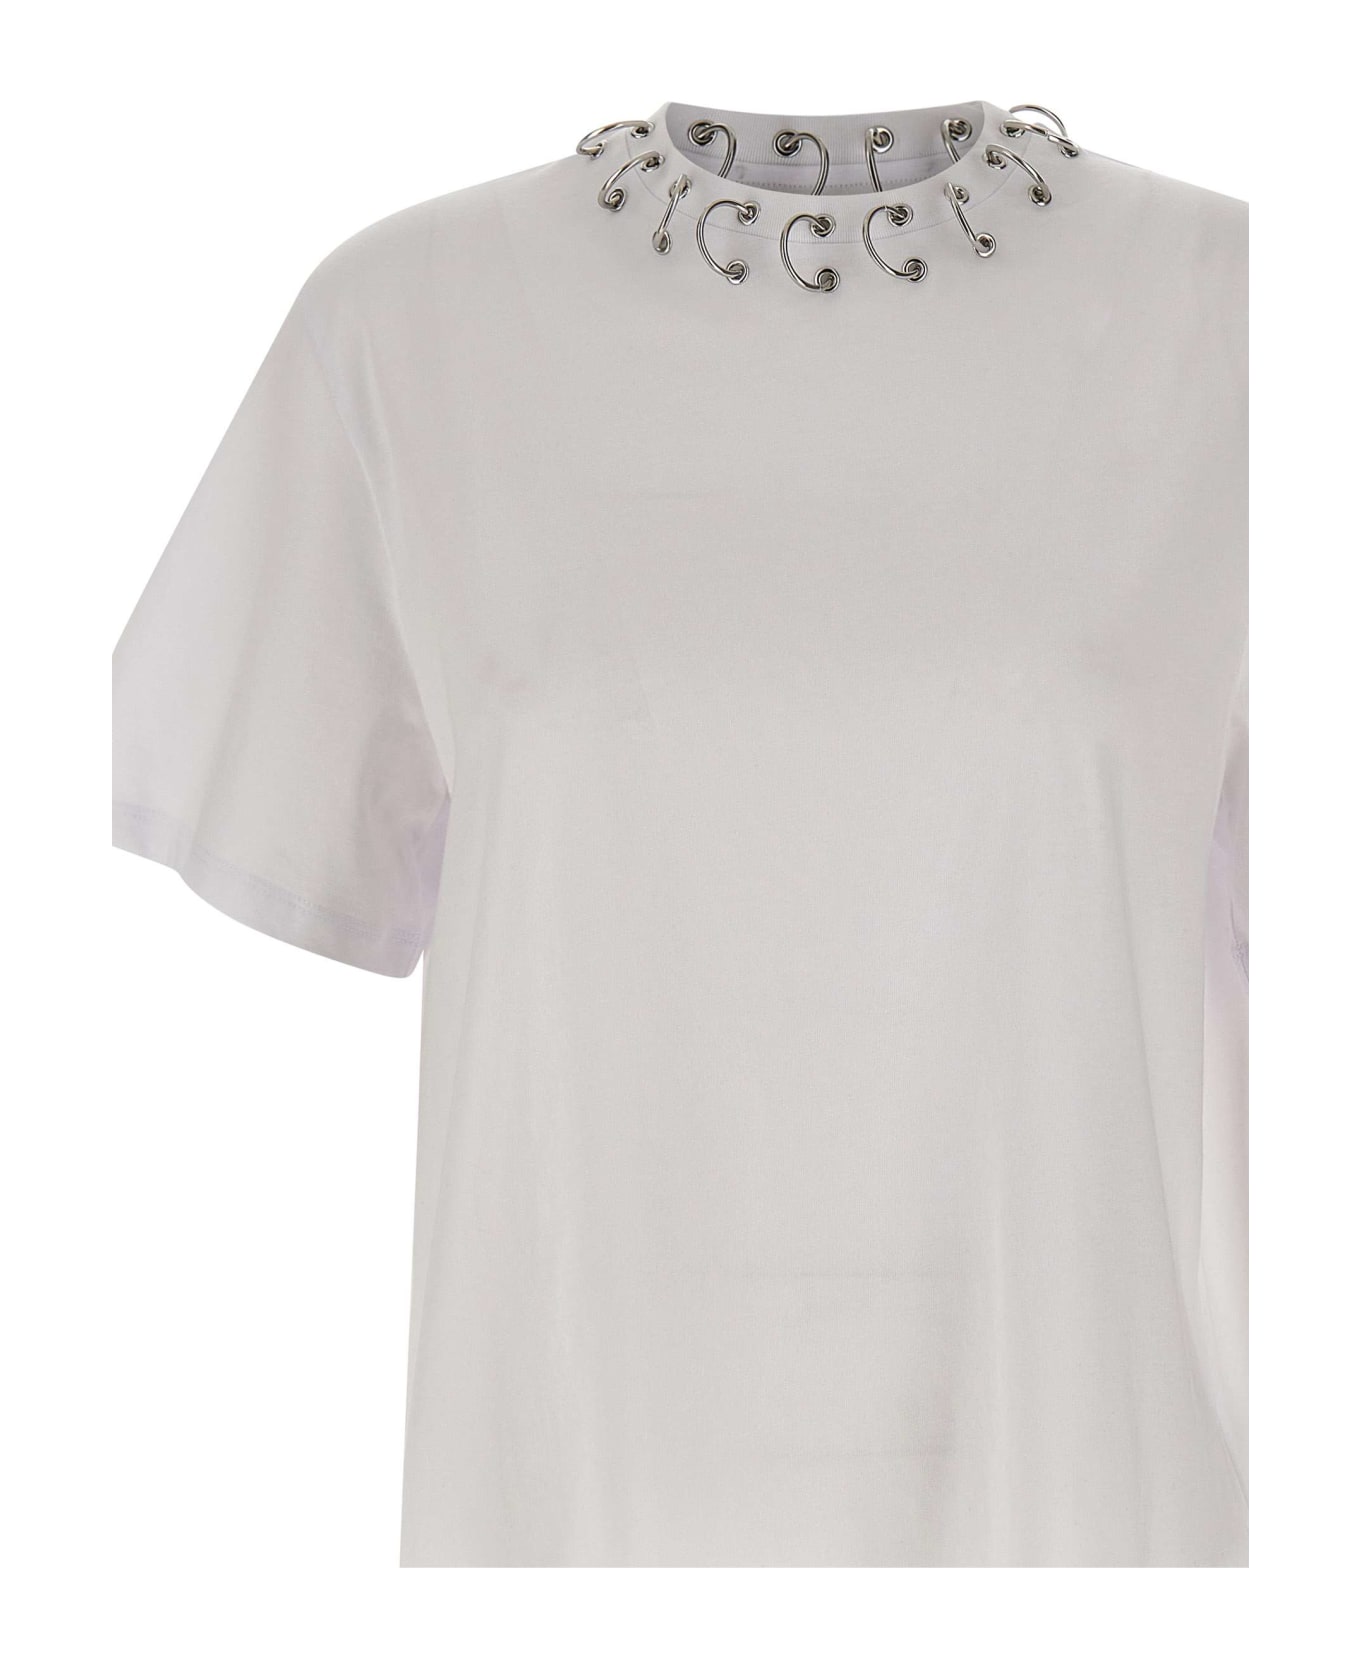 Rotate by Birger Christensen "oversize Ring" Cotton T-shirt - WHITE